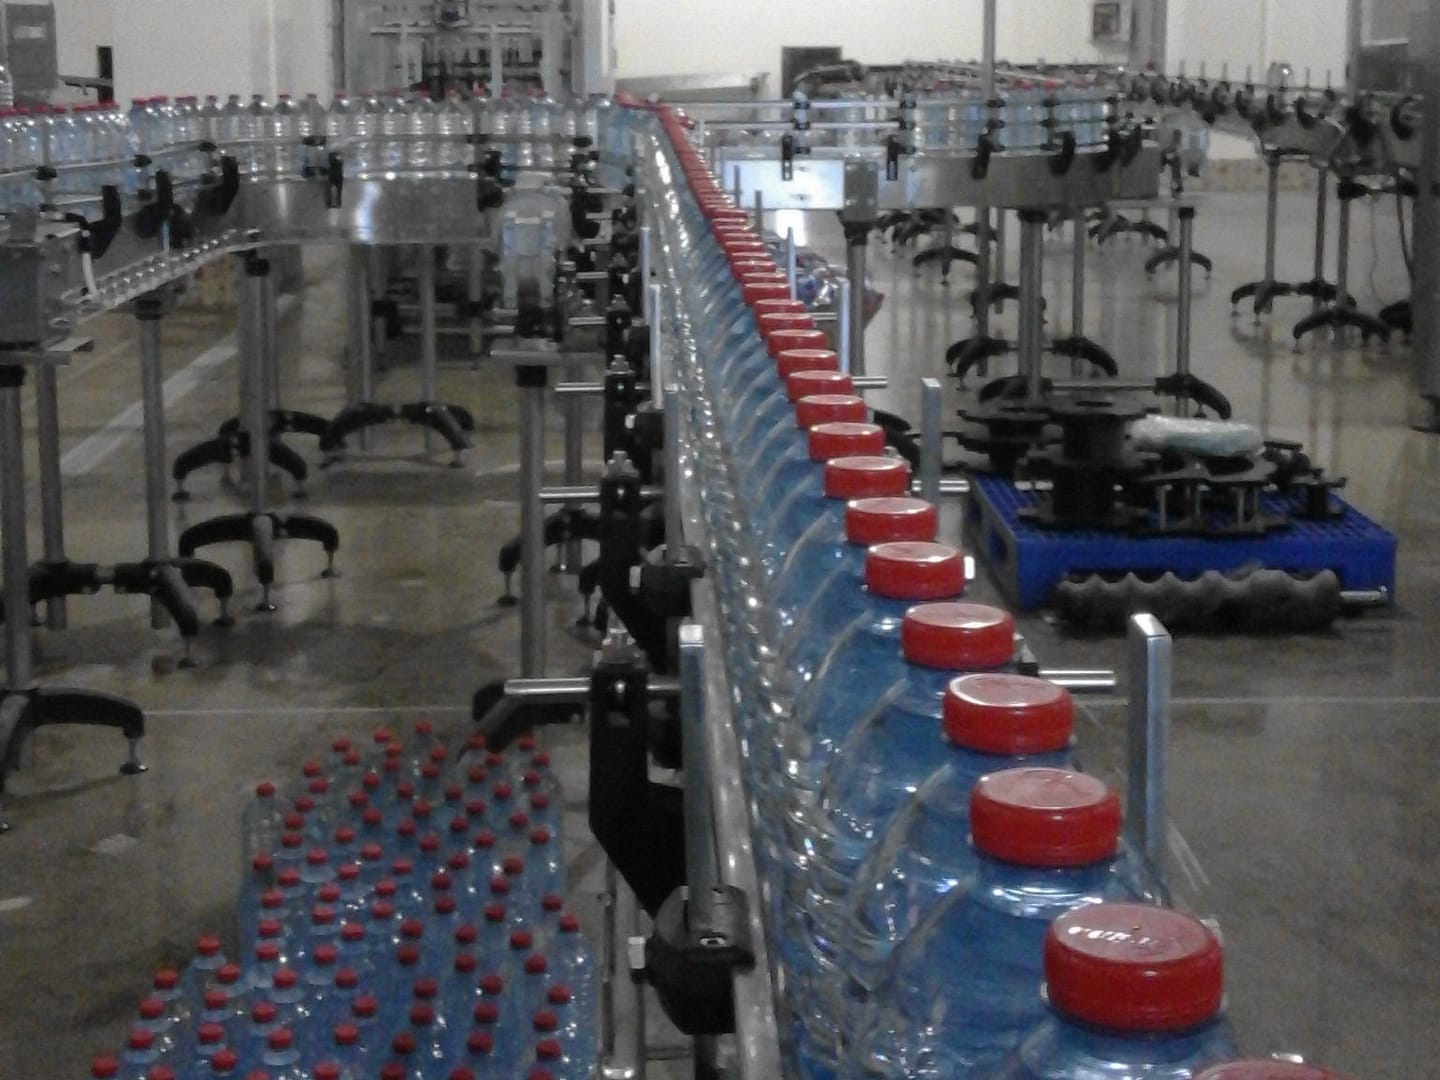 bottle conveyors